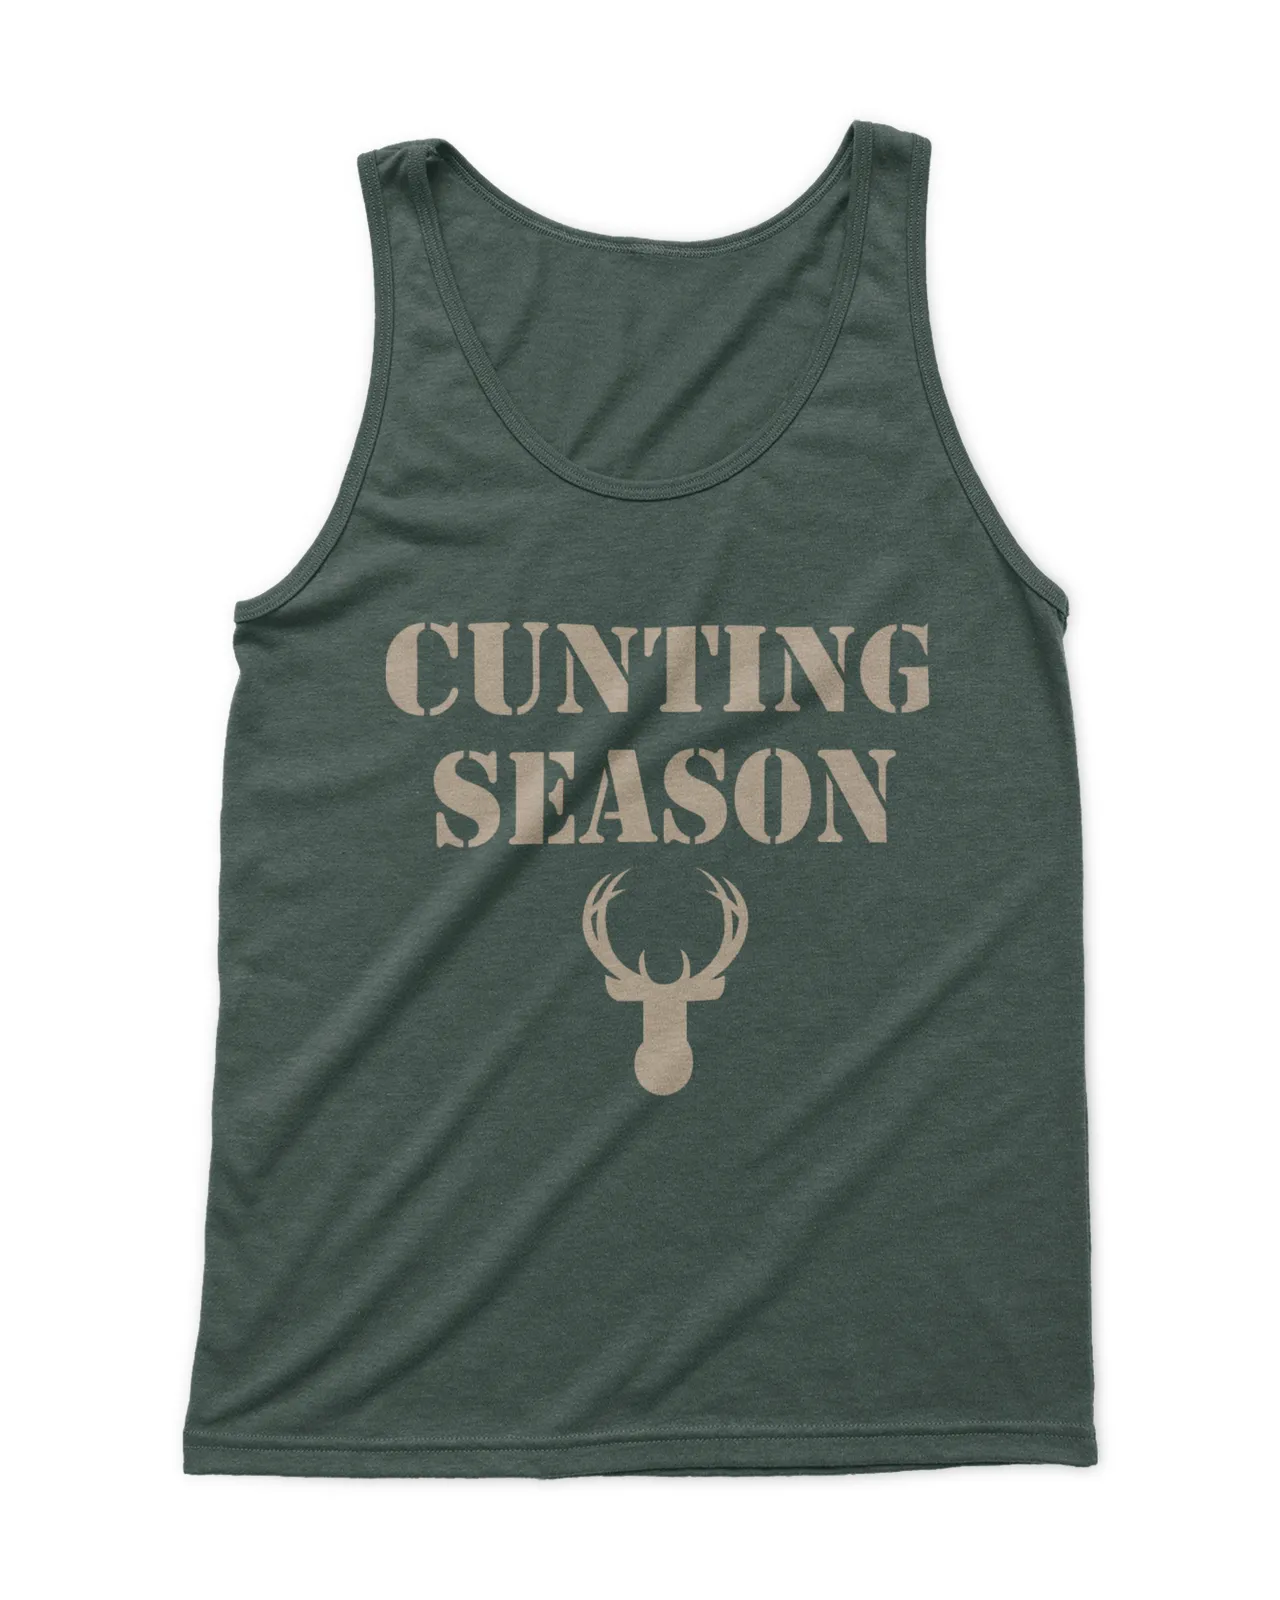 Cunting Season Shirt, Mug, Drinkwater, Boys and Girls Design